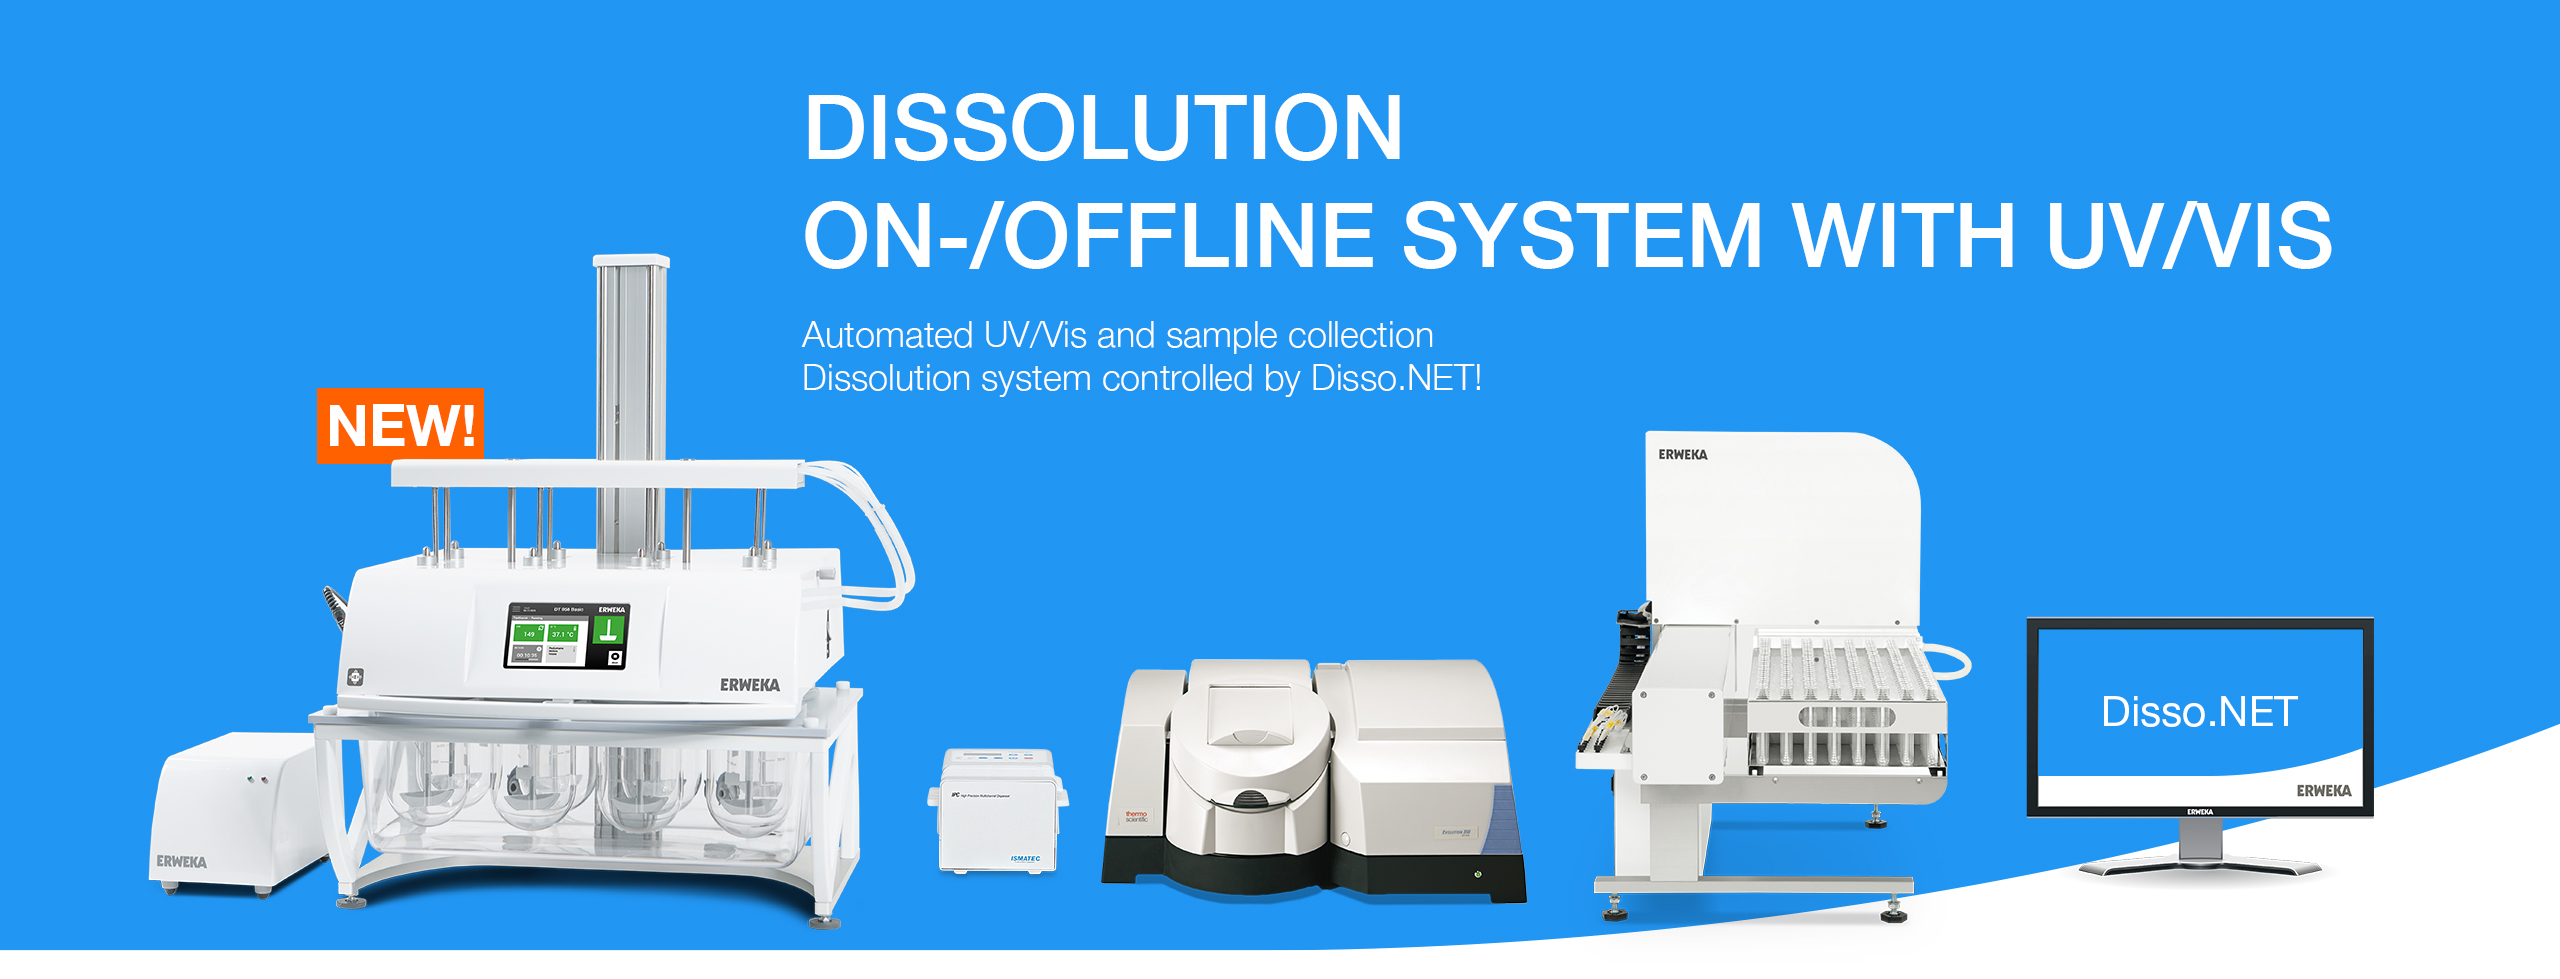 On-/Offline System with UV/Vis